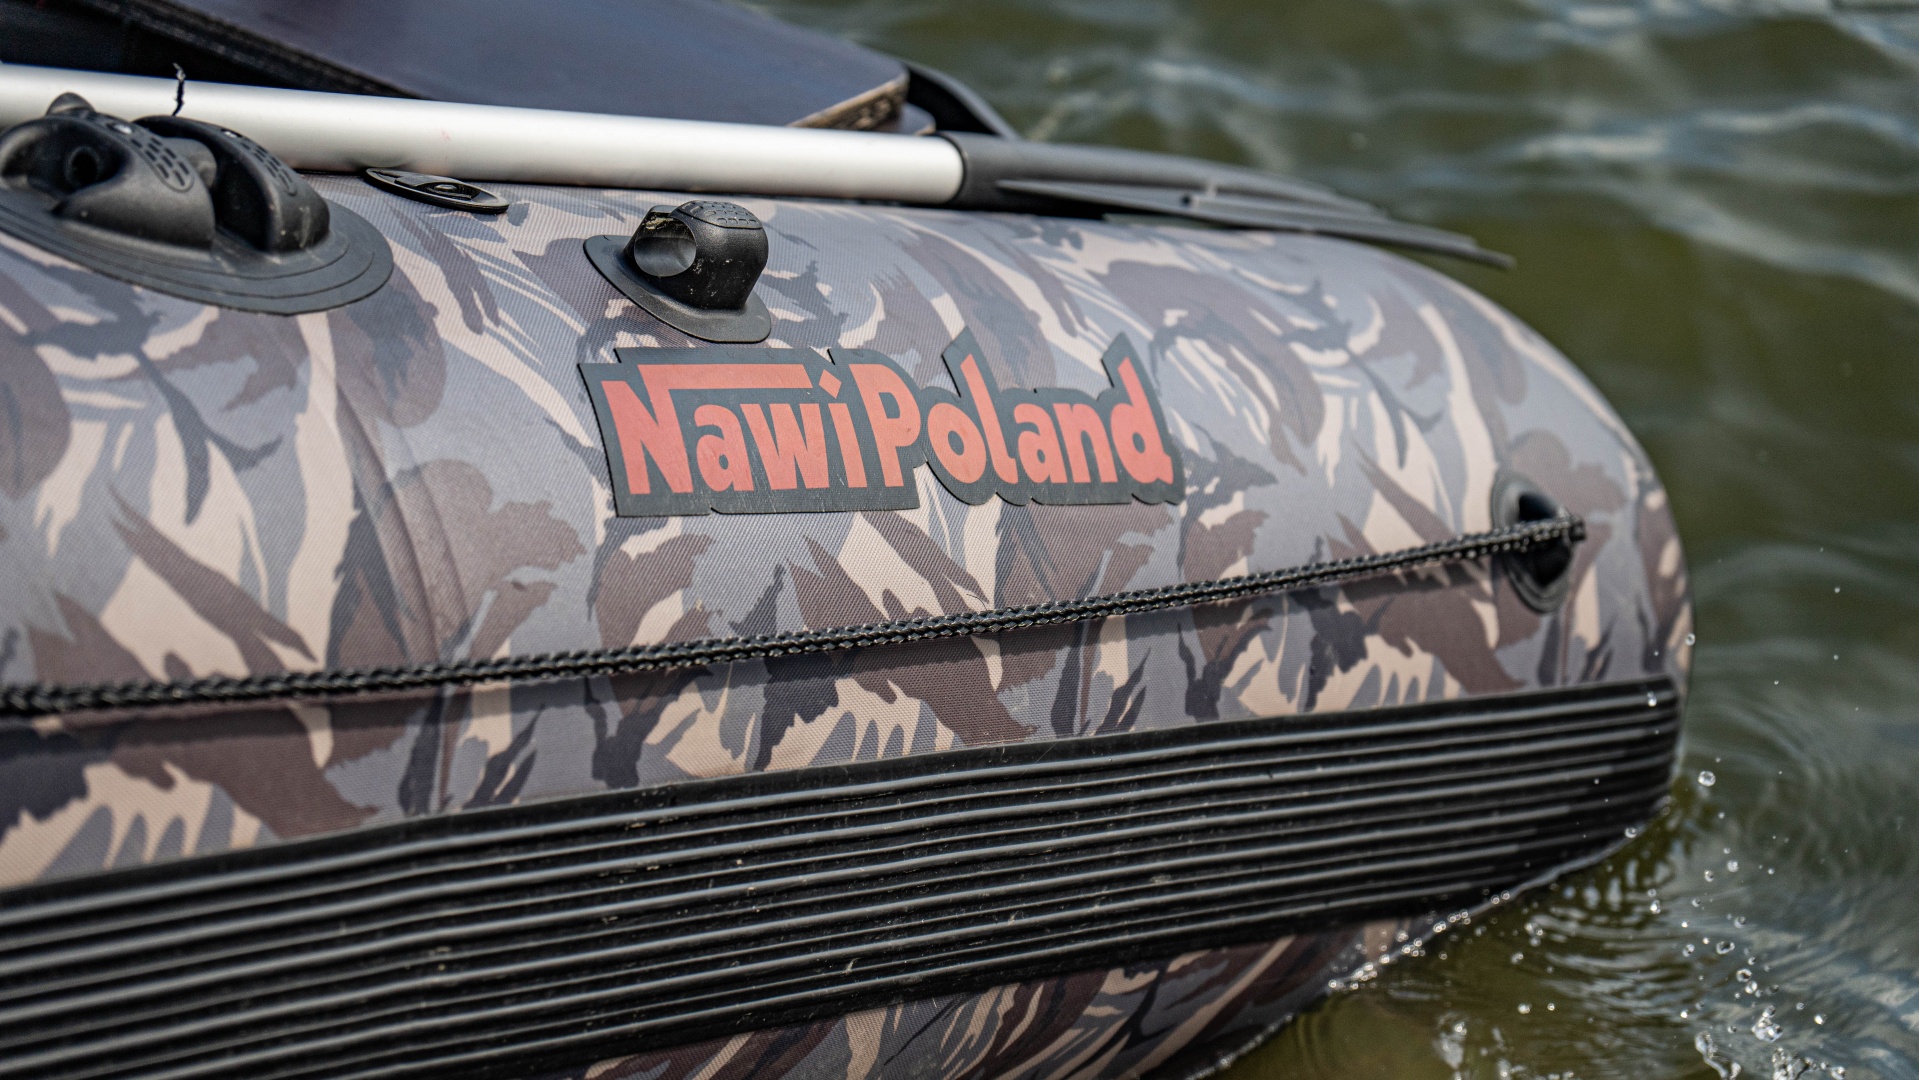 NawiPoland CAT 400 Inflatable Boat - Katamaranas